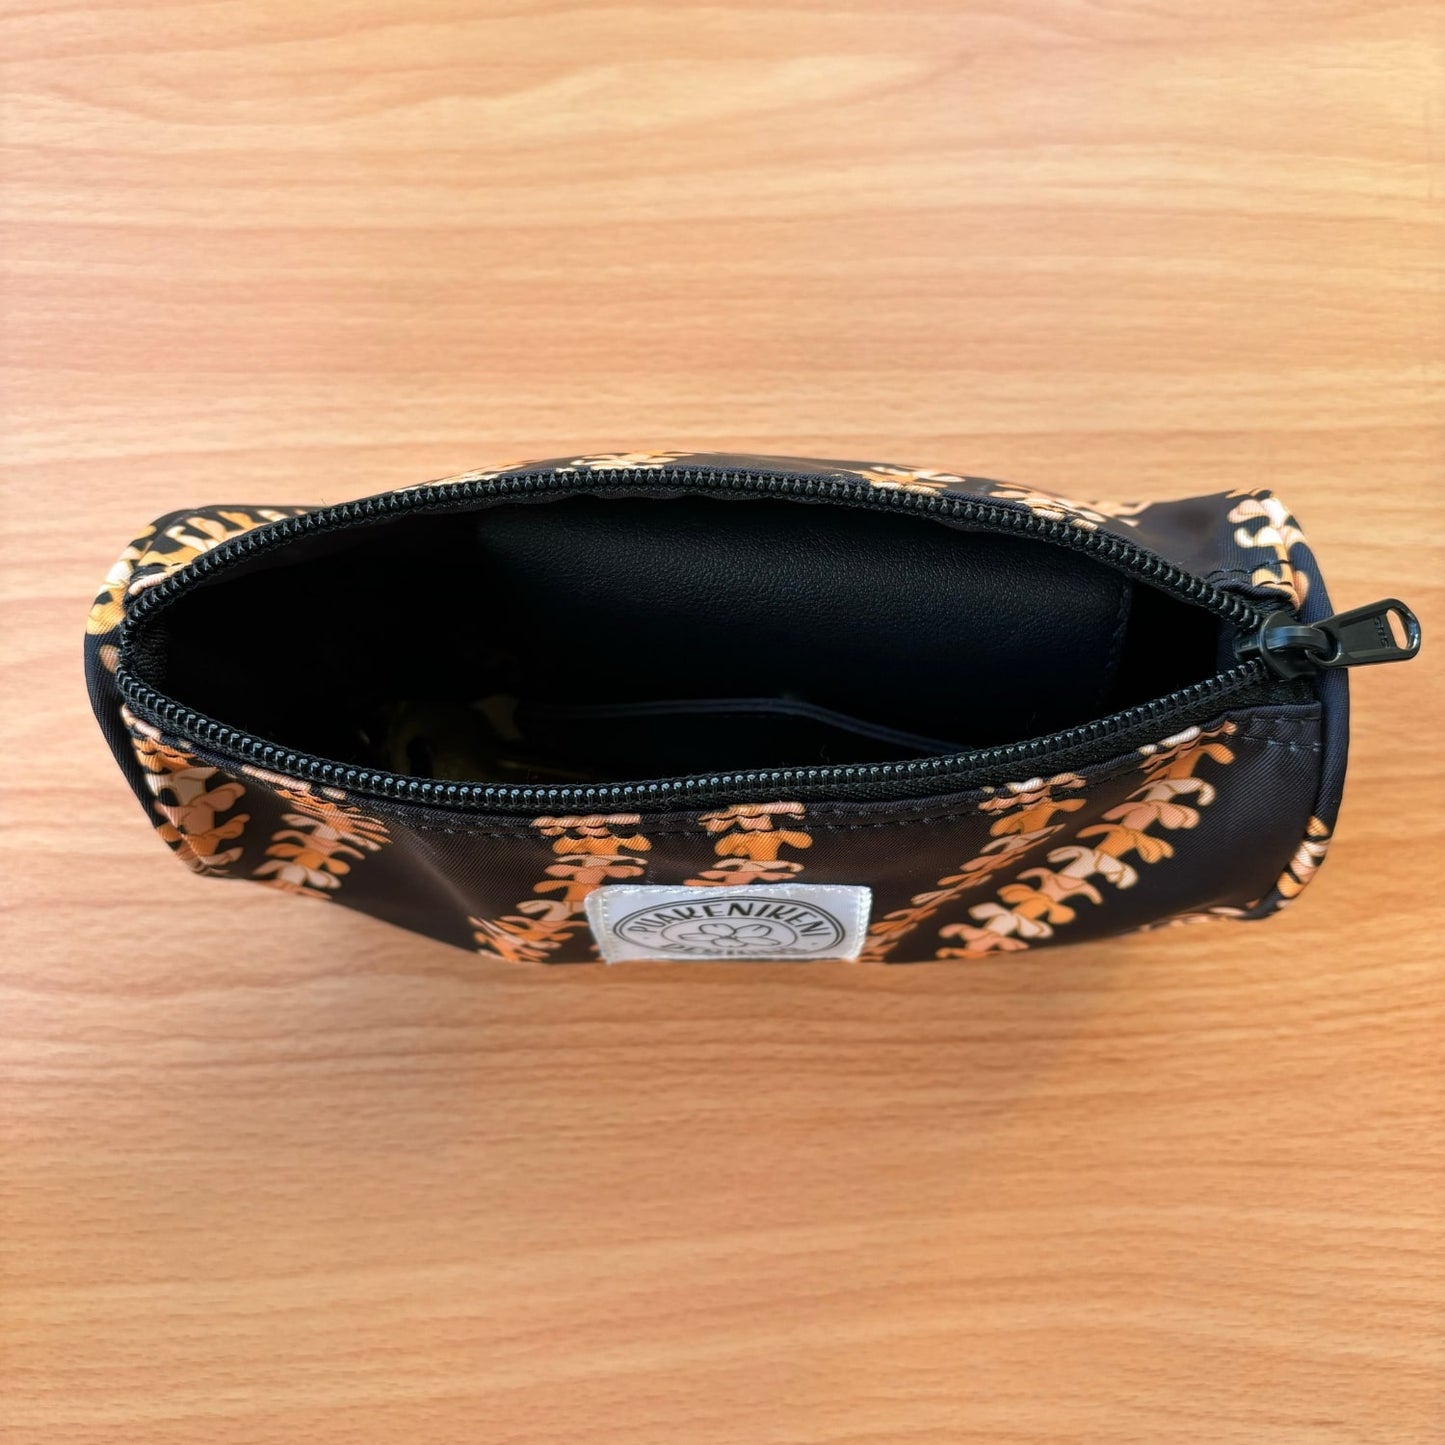 Mini Zipper Pouch - make-up bag, clutch, wristlet, with puakenikeni lei design from Puakenikeni Designs inside view